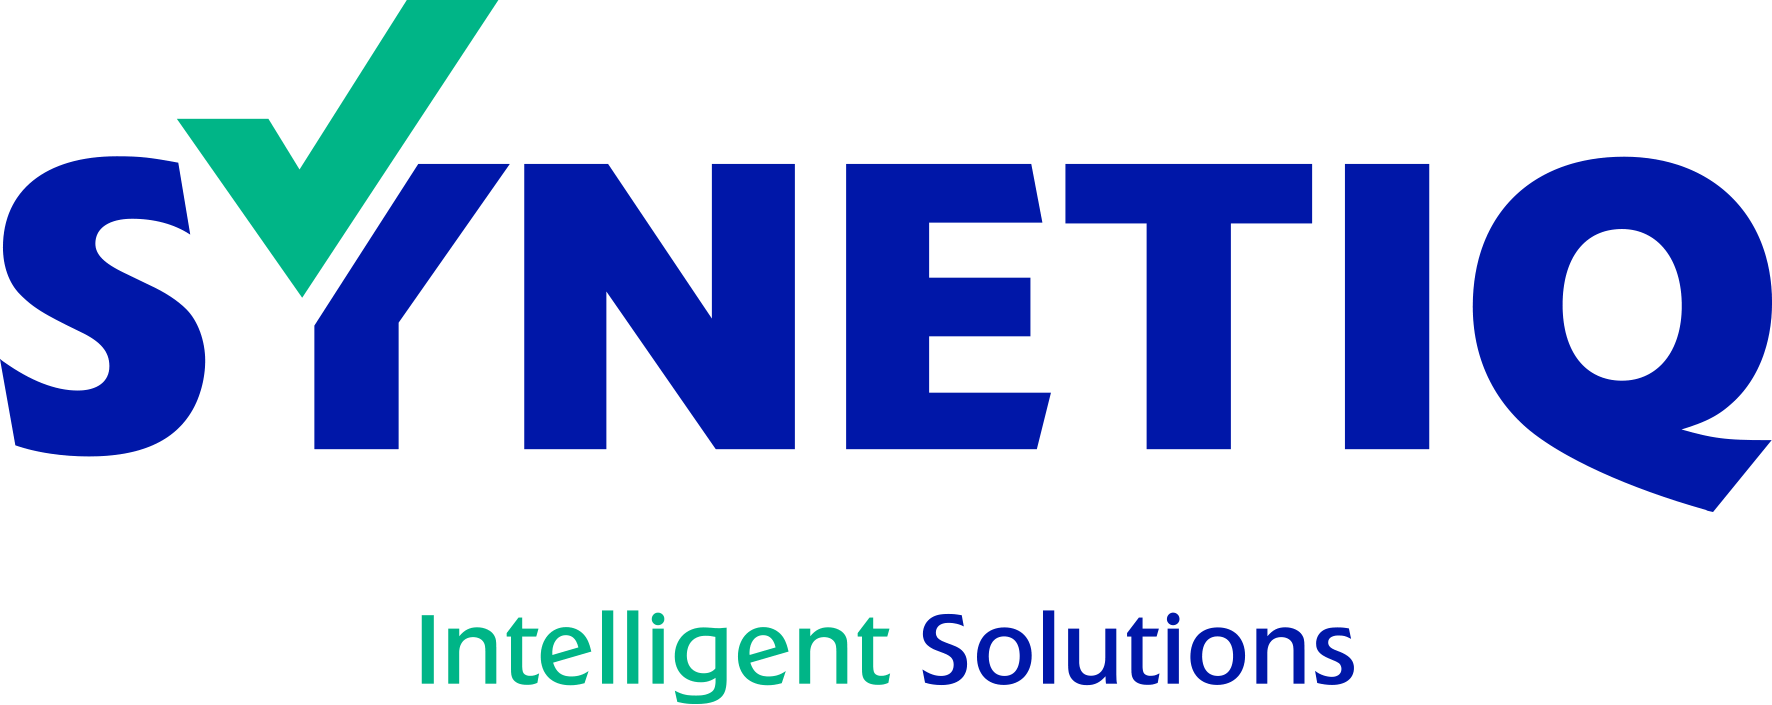 SYNETIQ Ltd logo